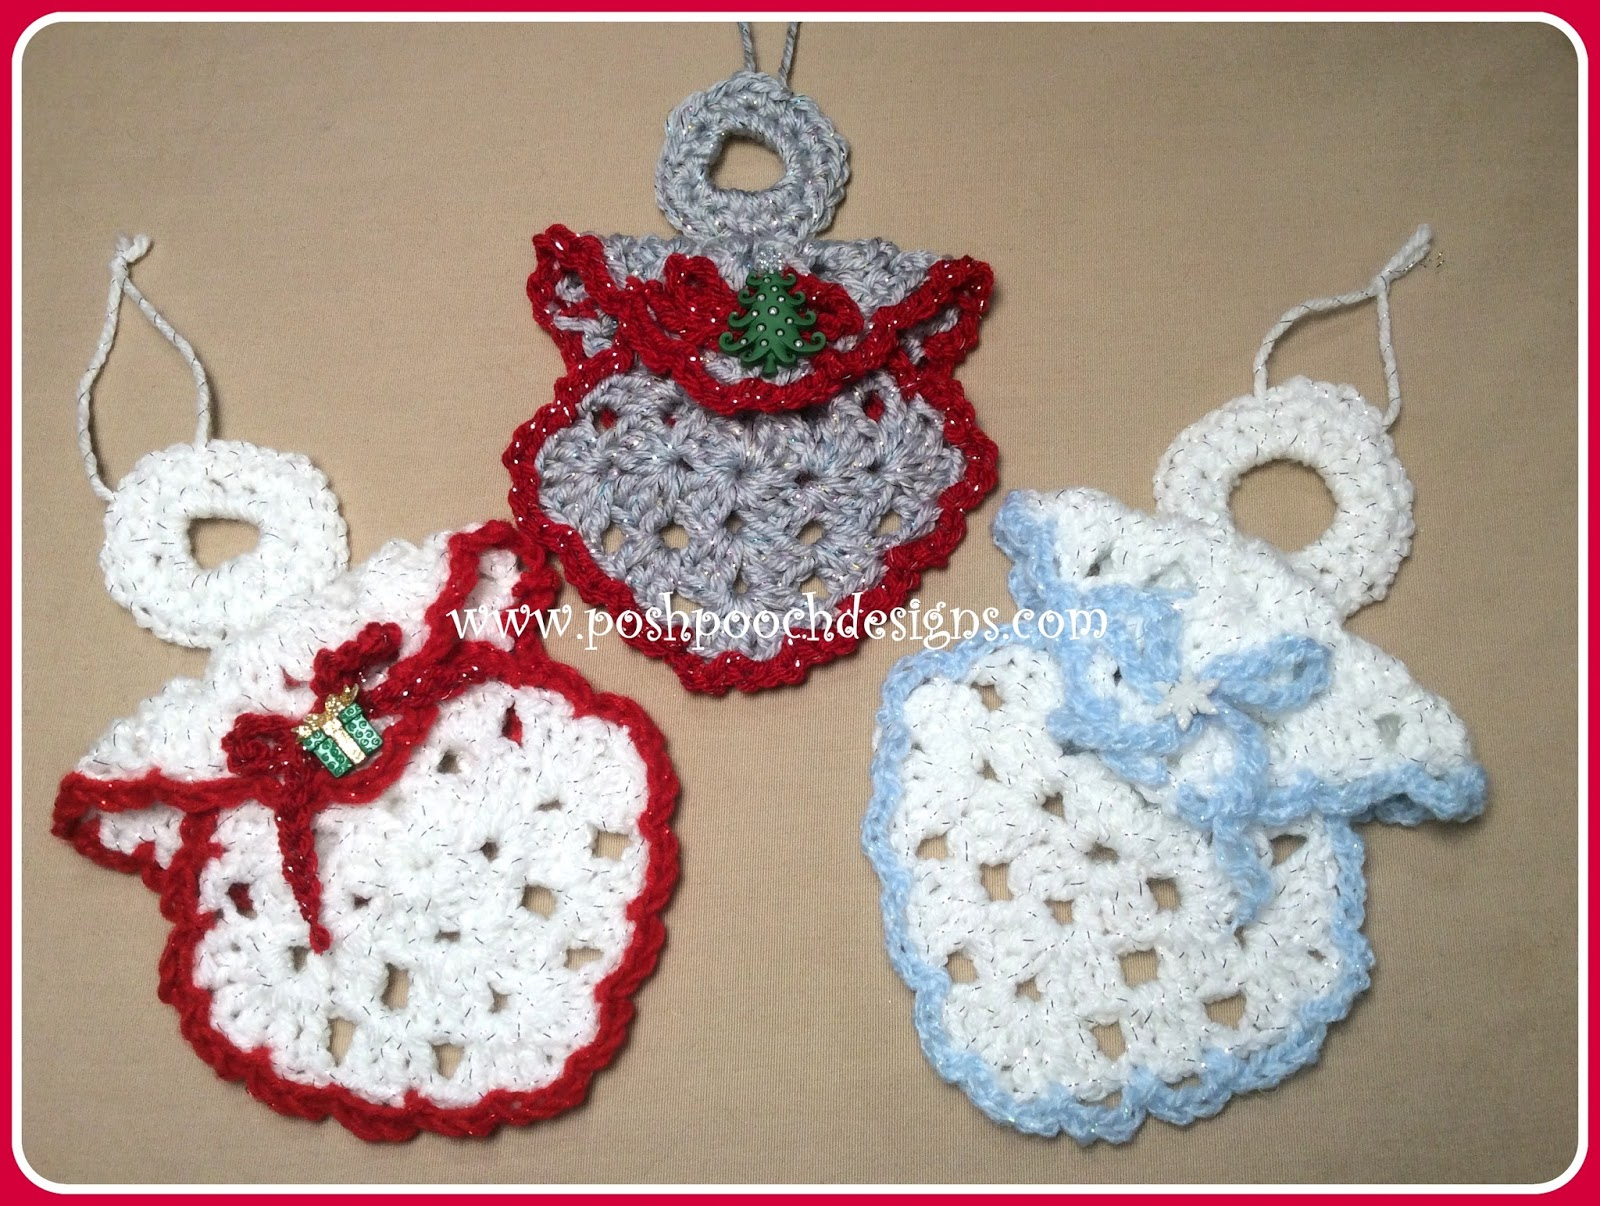 Crochet Angel Patterns Posh Pooch Designs Dog Clothes Granny Square Angel Ornament Crochet